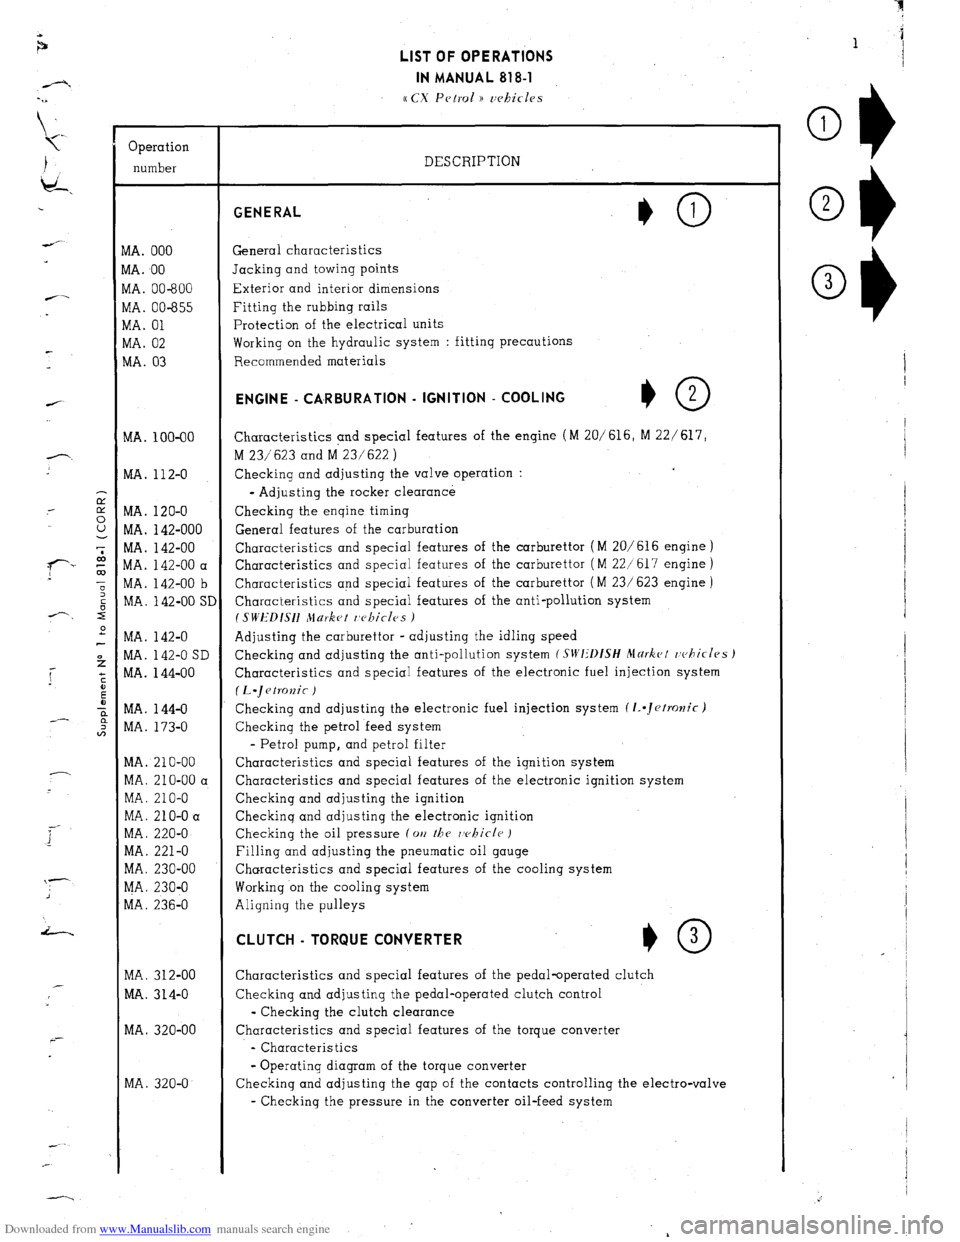 Citroen CX 1979 1.G Workshop Manual Downloaded from www.Manualslib.com manuals search engine Operation 
number 
VIA. 000 
VIA. 00 
VIA. 00-600 
vlA. 00-655 
VIA. 01 
WA. 02 
MA. 03 
MA. 100-00 
MA. 112-O 
MA. 120-O 
MA. 142-000 
MA. 142